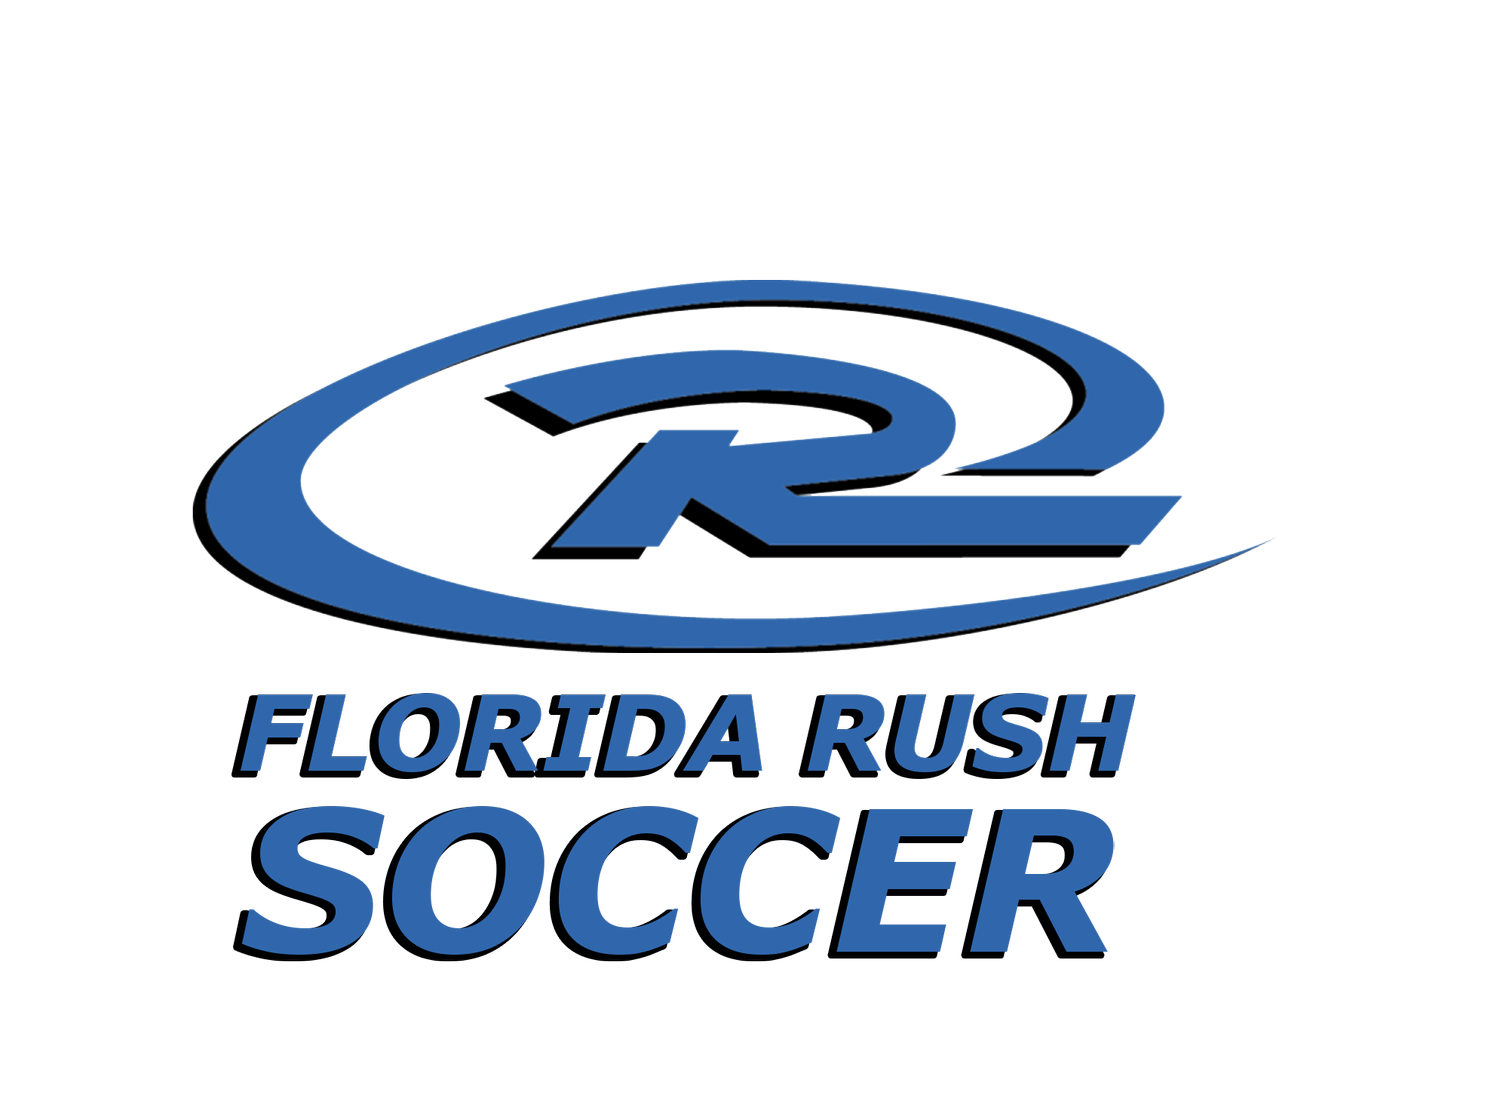 Florida Rush Soccer